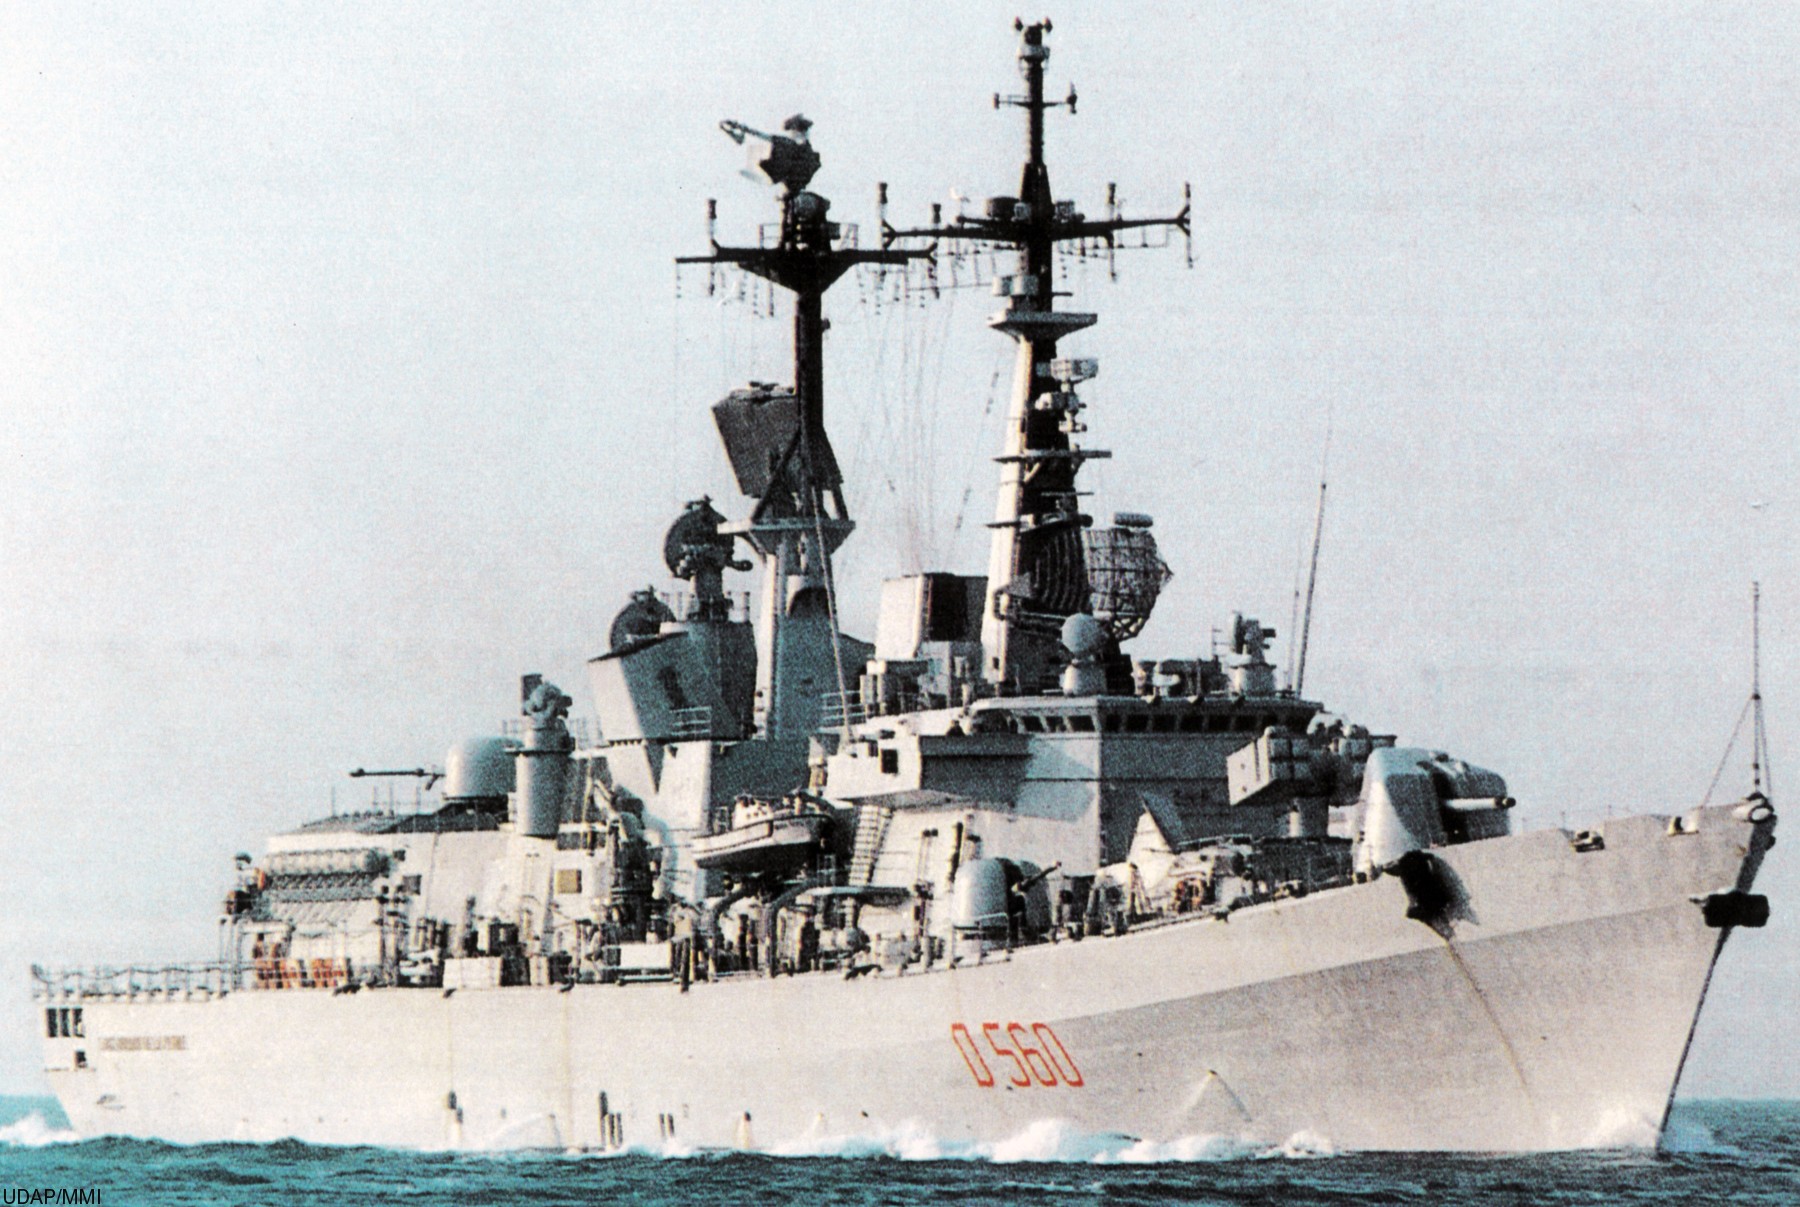 d-560 luigi durand de la penne its nave guided missile destroyer ddg italian navy marina militare 47